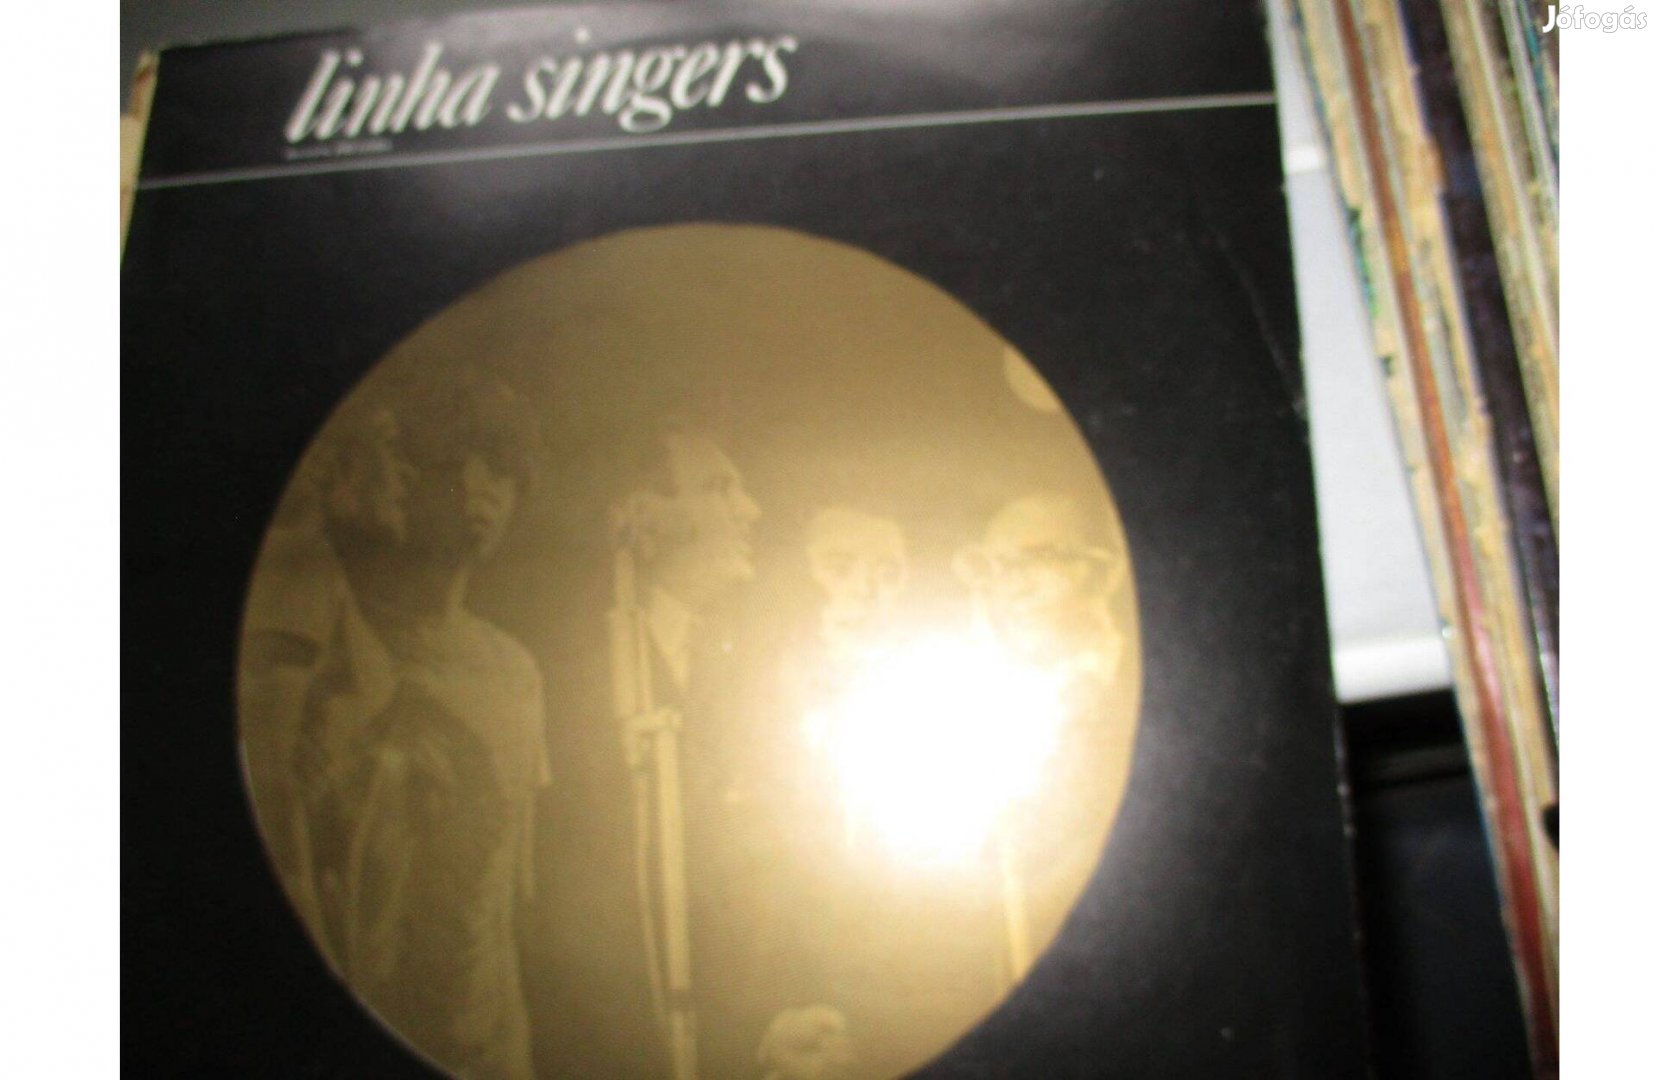 Linha Singers bakelit hanglemez eladó